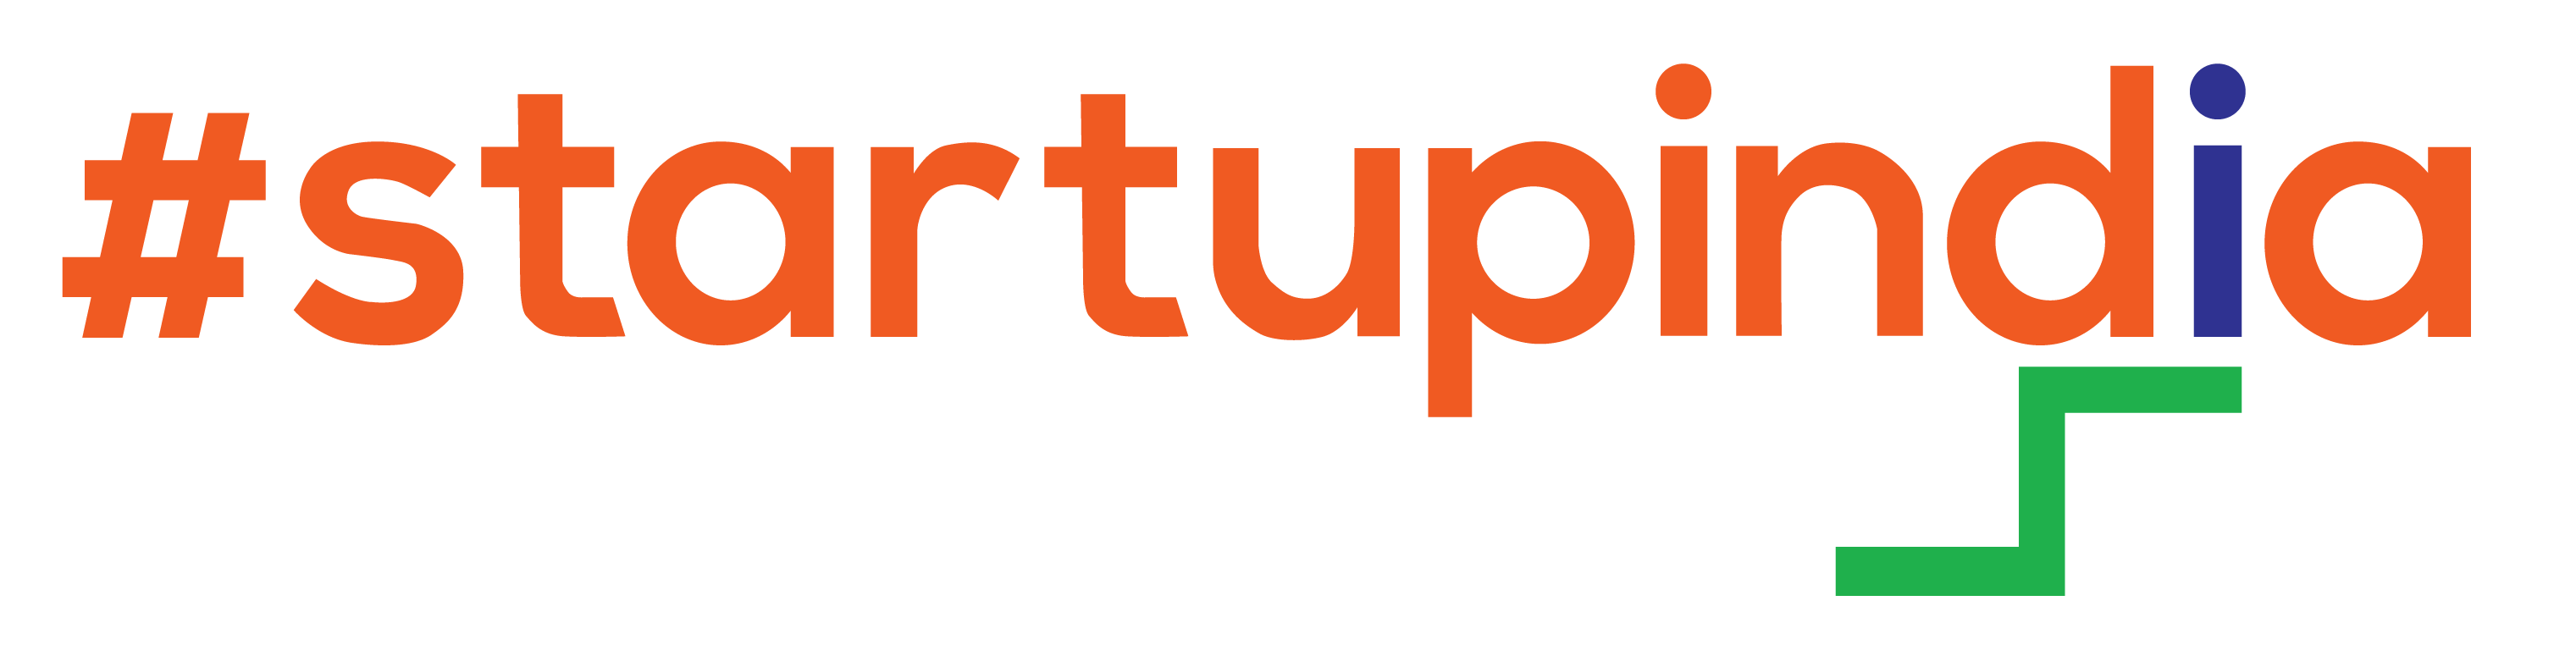 Startup India Logo1-02